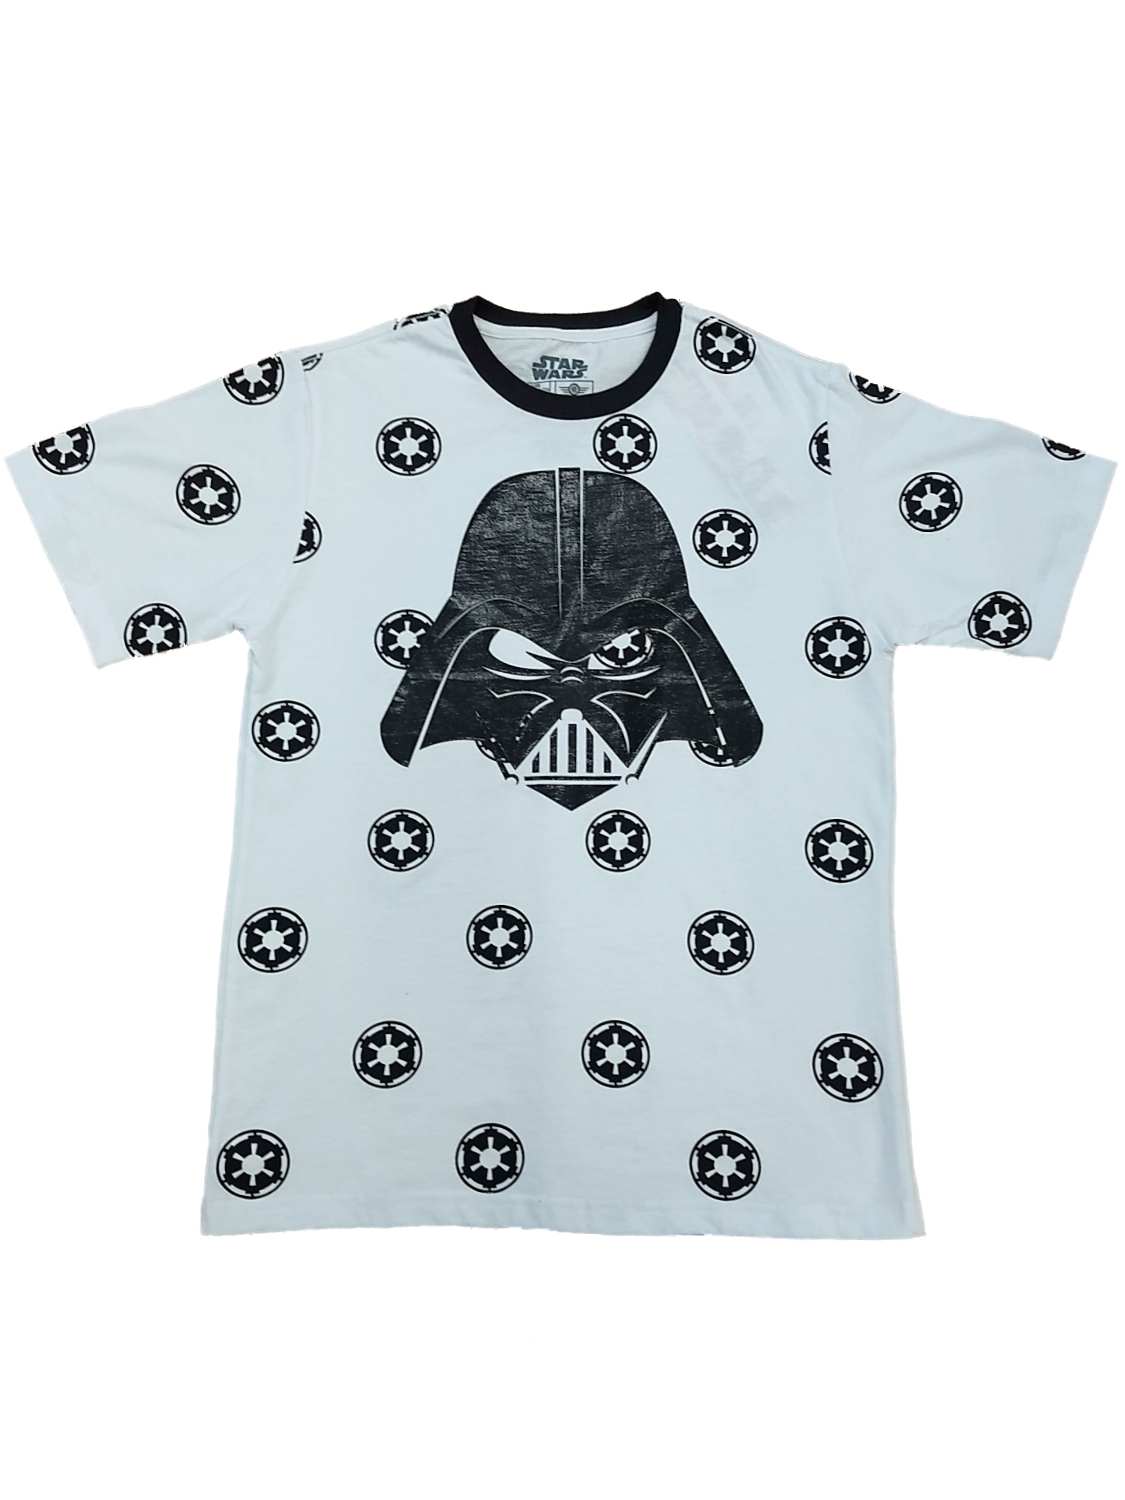 Star Wars Boys White & Black Darth Vader & Empire Symbol T-Shirt Tee Shirt XL